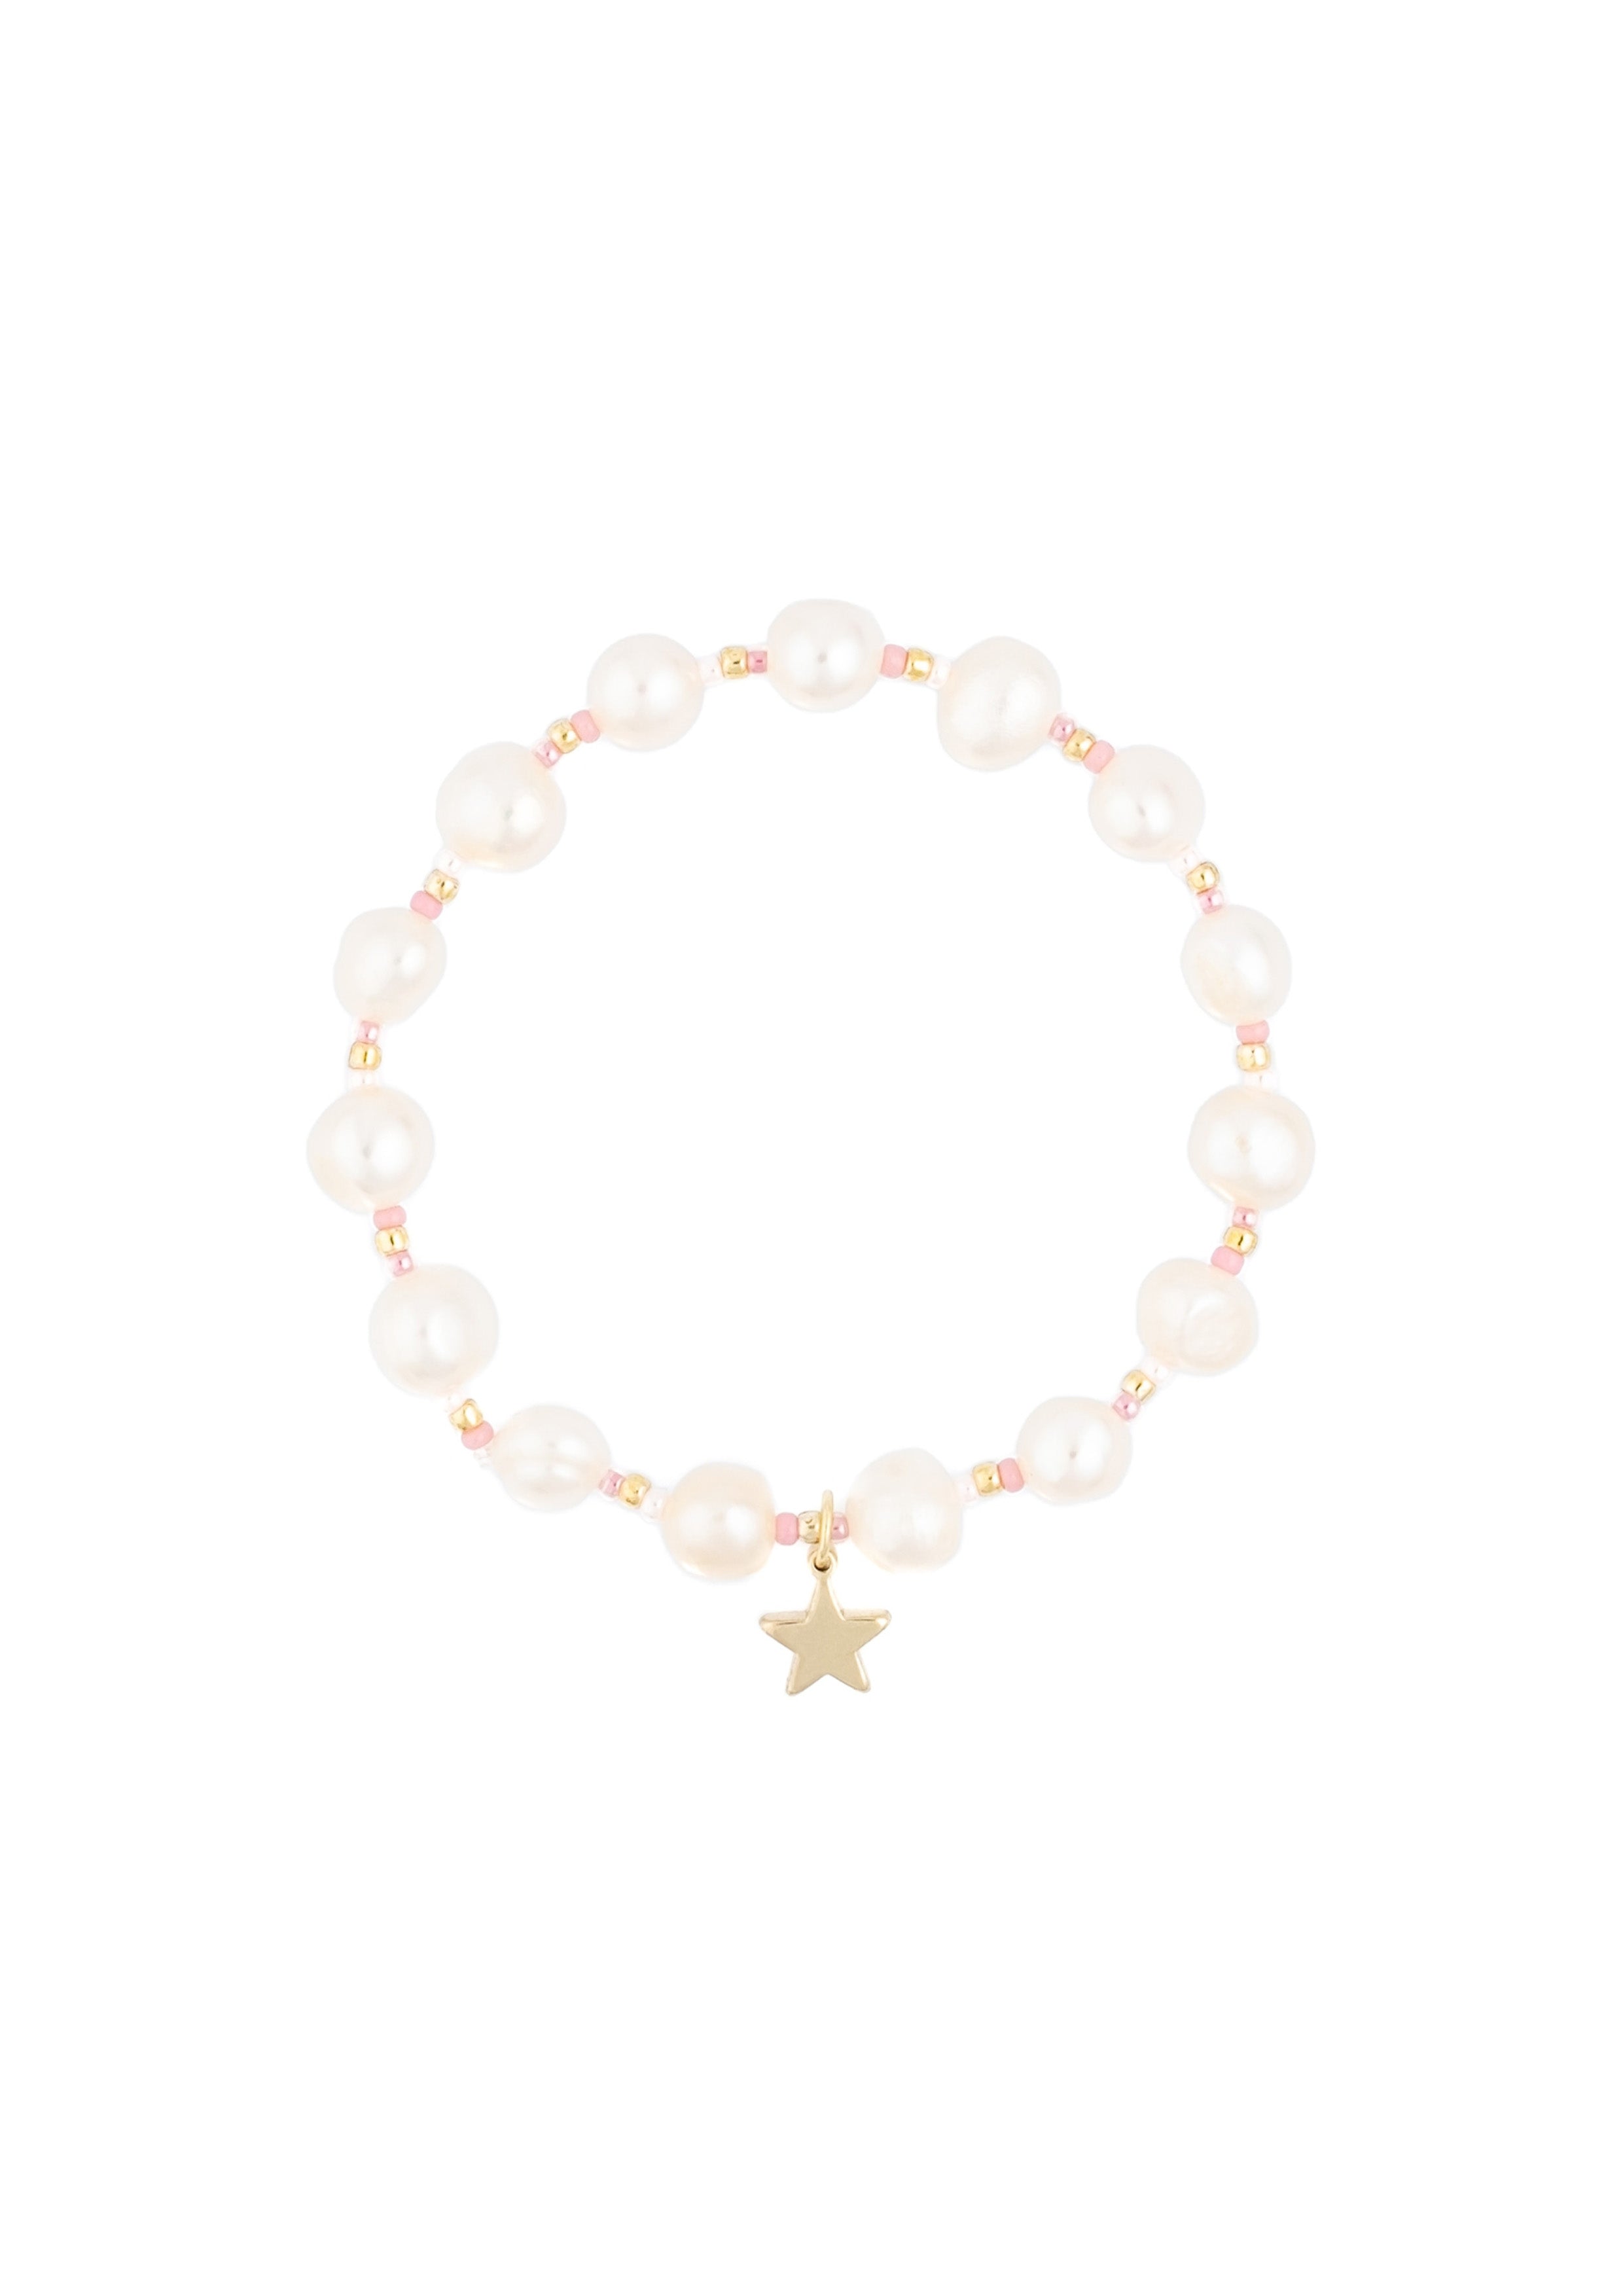 Pearlbead bracelet w/glass beads pink